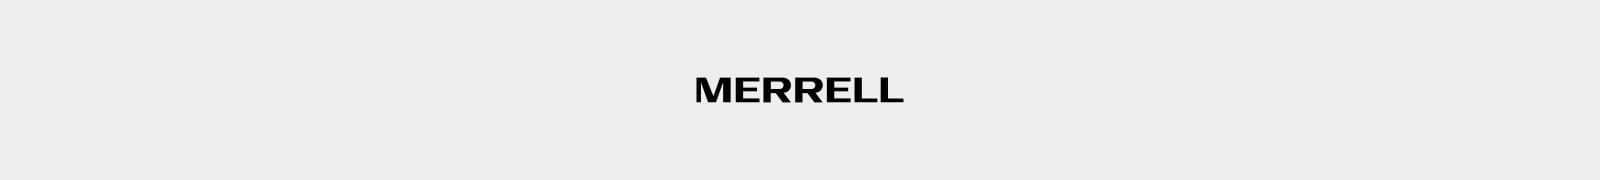 Merrell header image